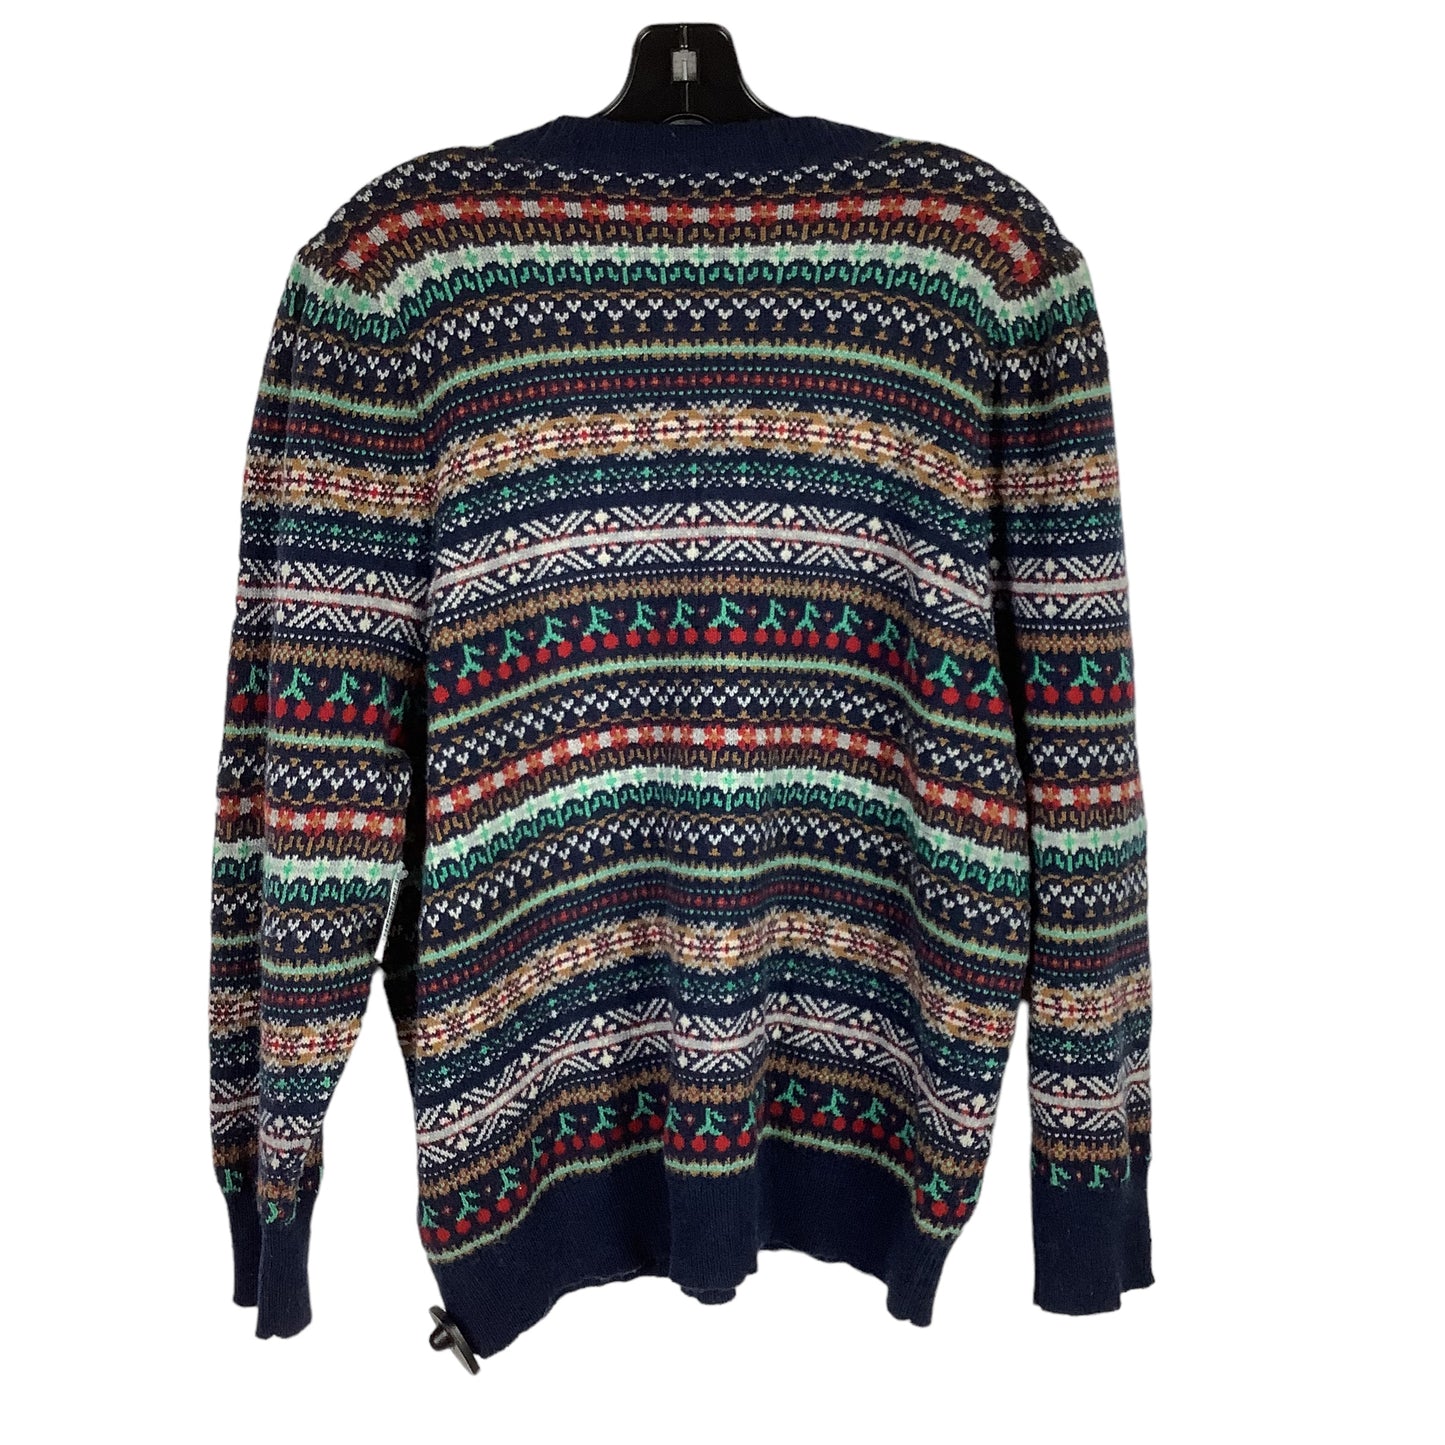 Sweater By J Crew  Size: 2x